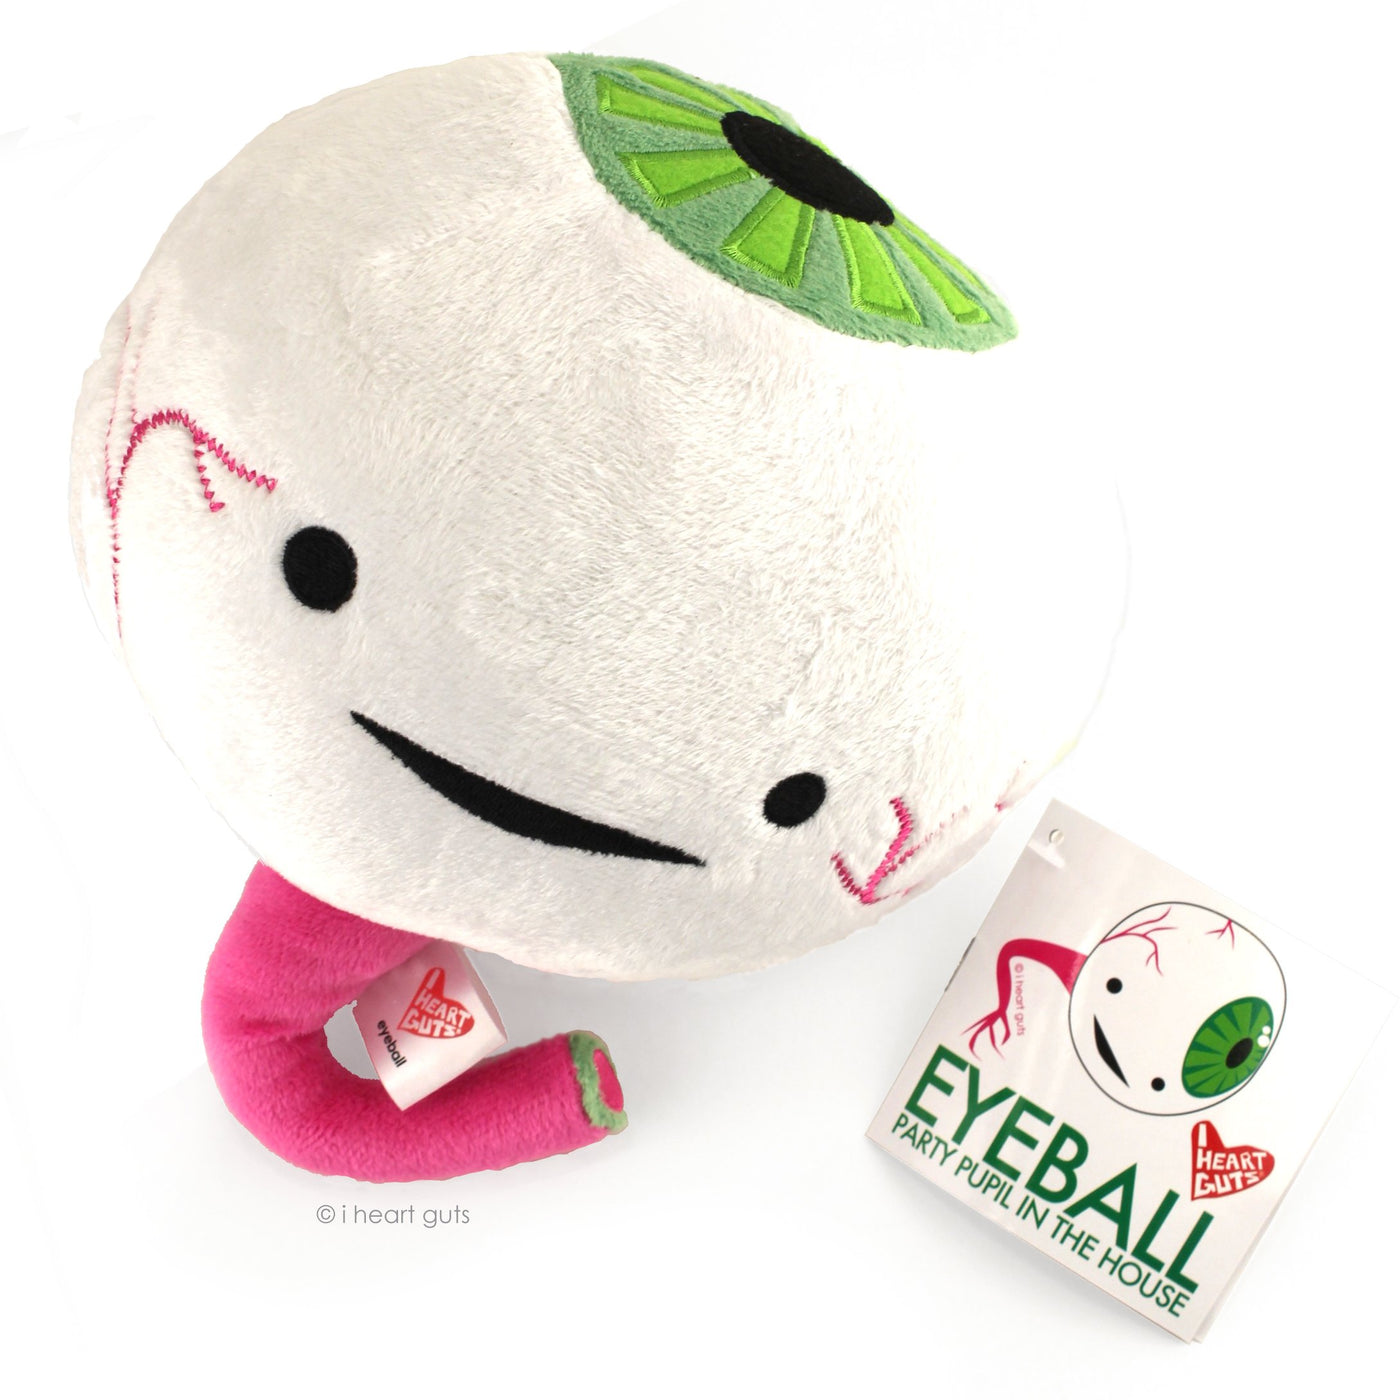 Eyeball Plush Green Iris - Party Pupil in the House! - Plush Organ Stuffed Toy Pillow